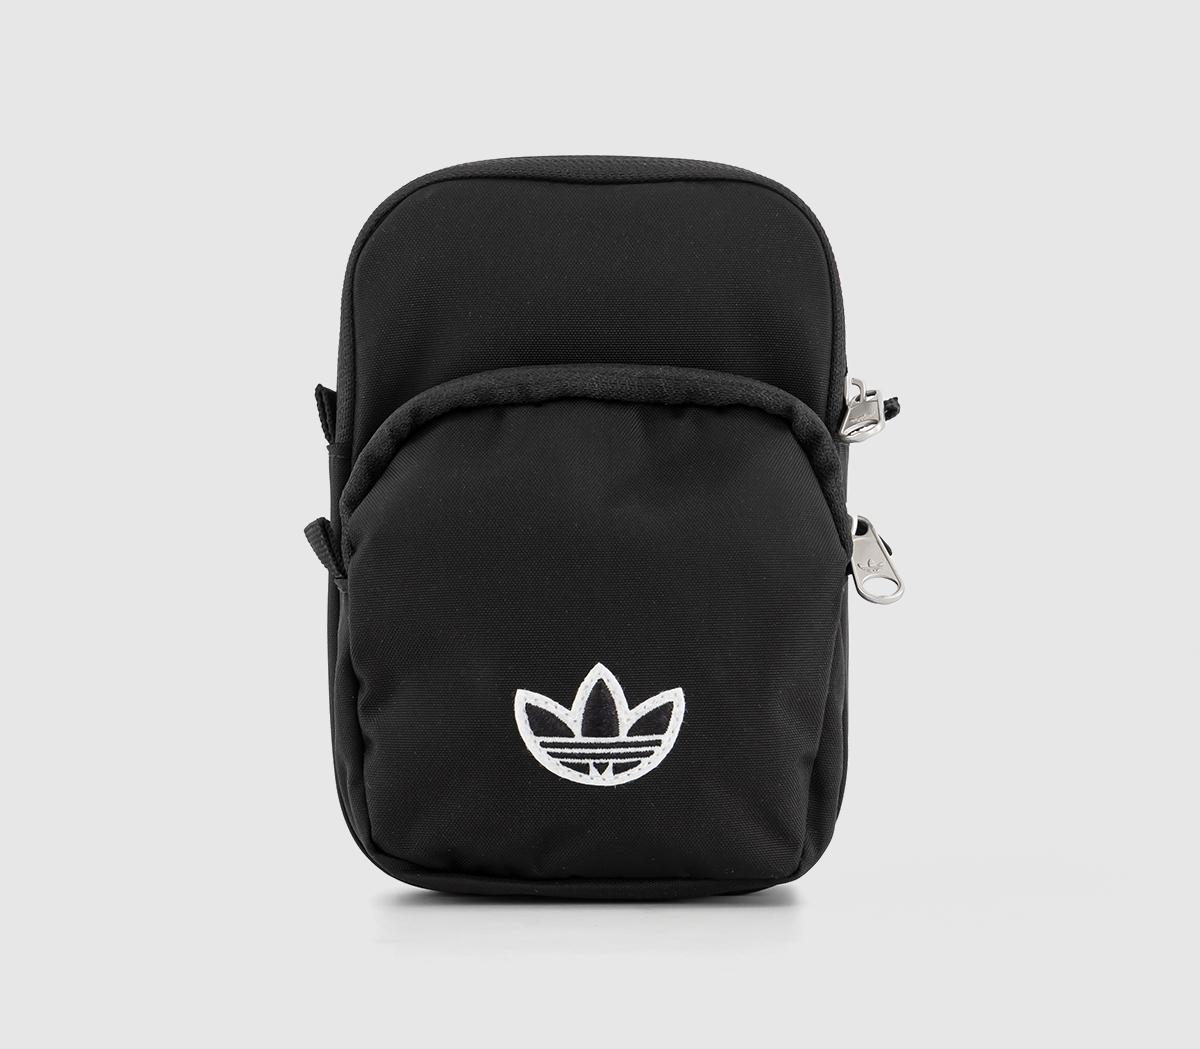 Adidas Pe Festival Bag Black, One Size